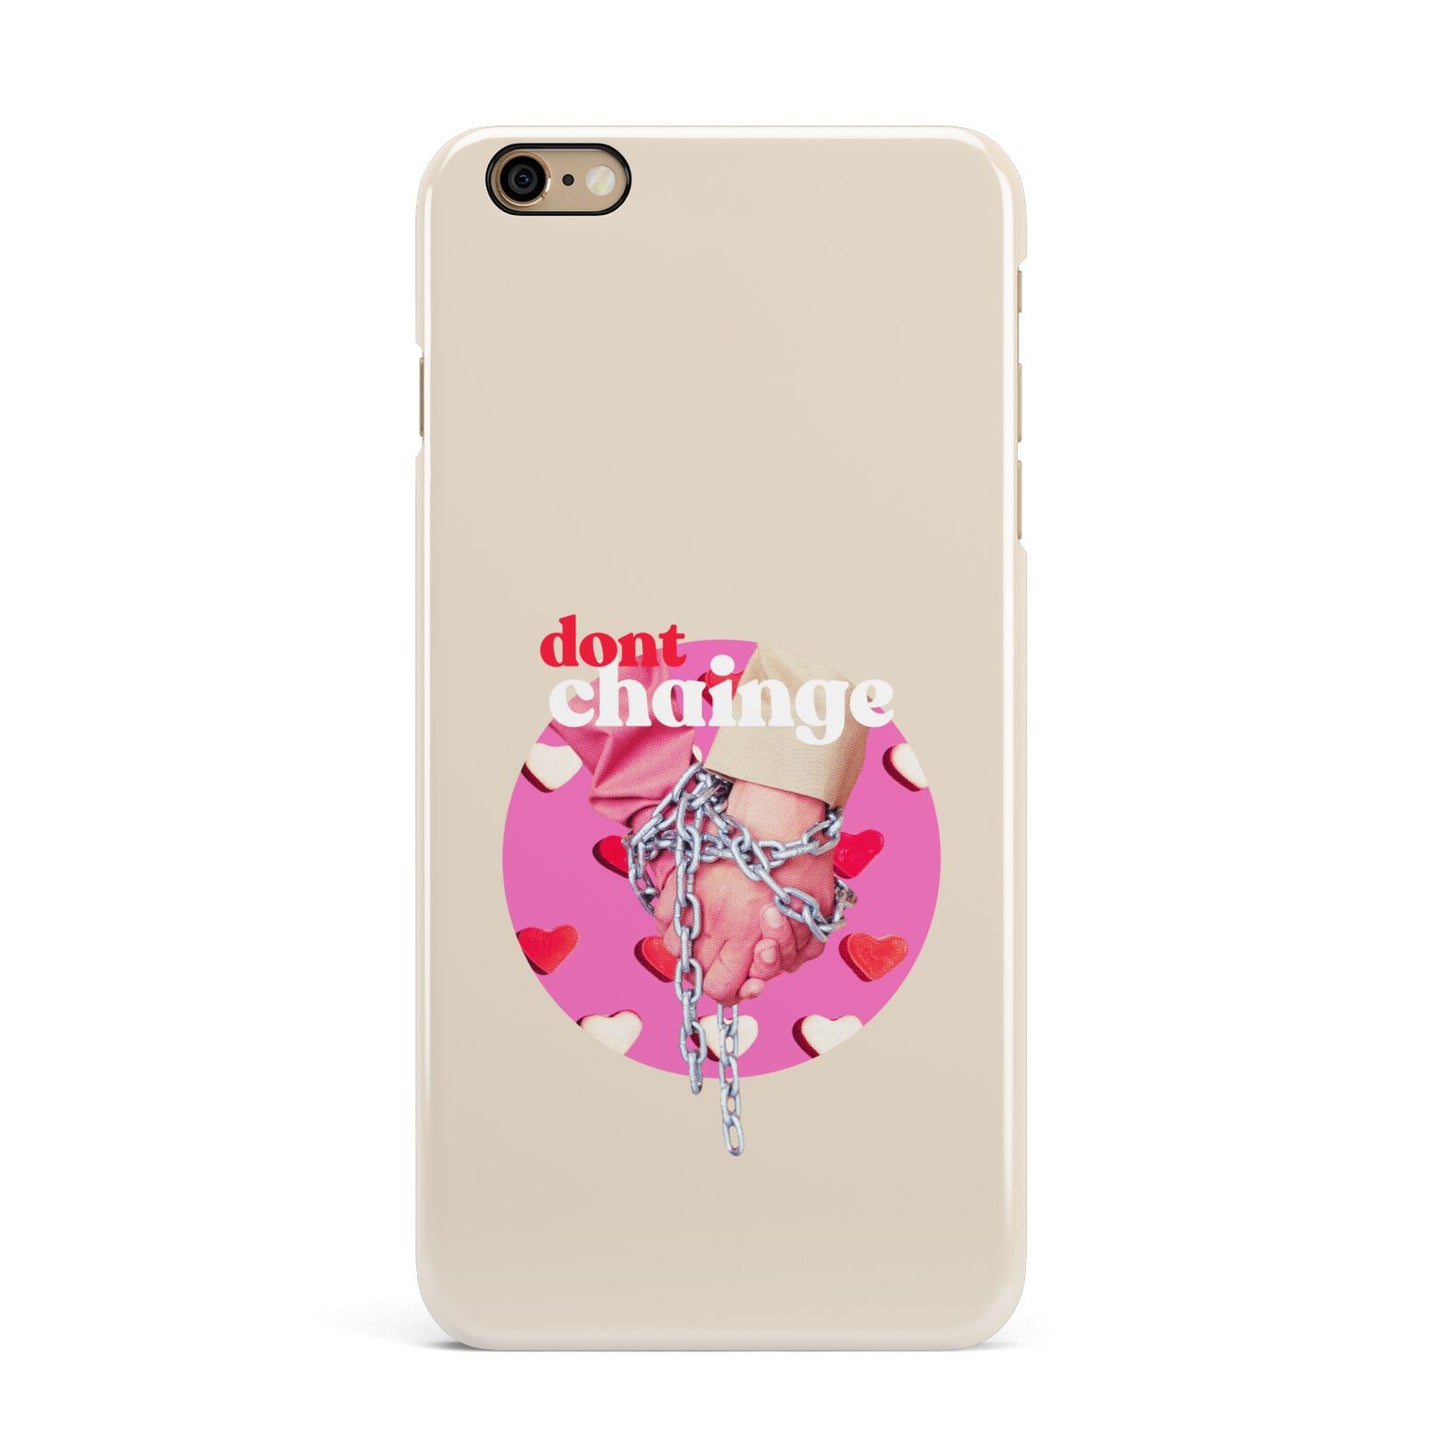 Retro Valentines Quote iPhone 6 Plus 3D Snap Case on Gold Phone